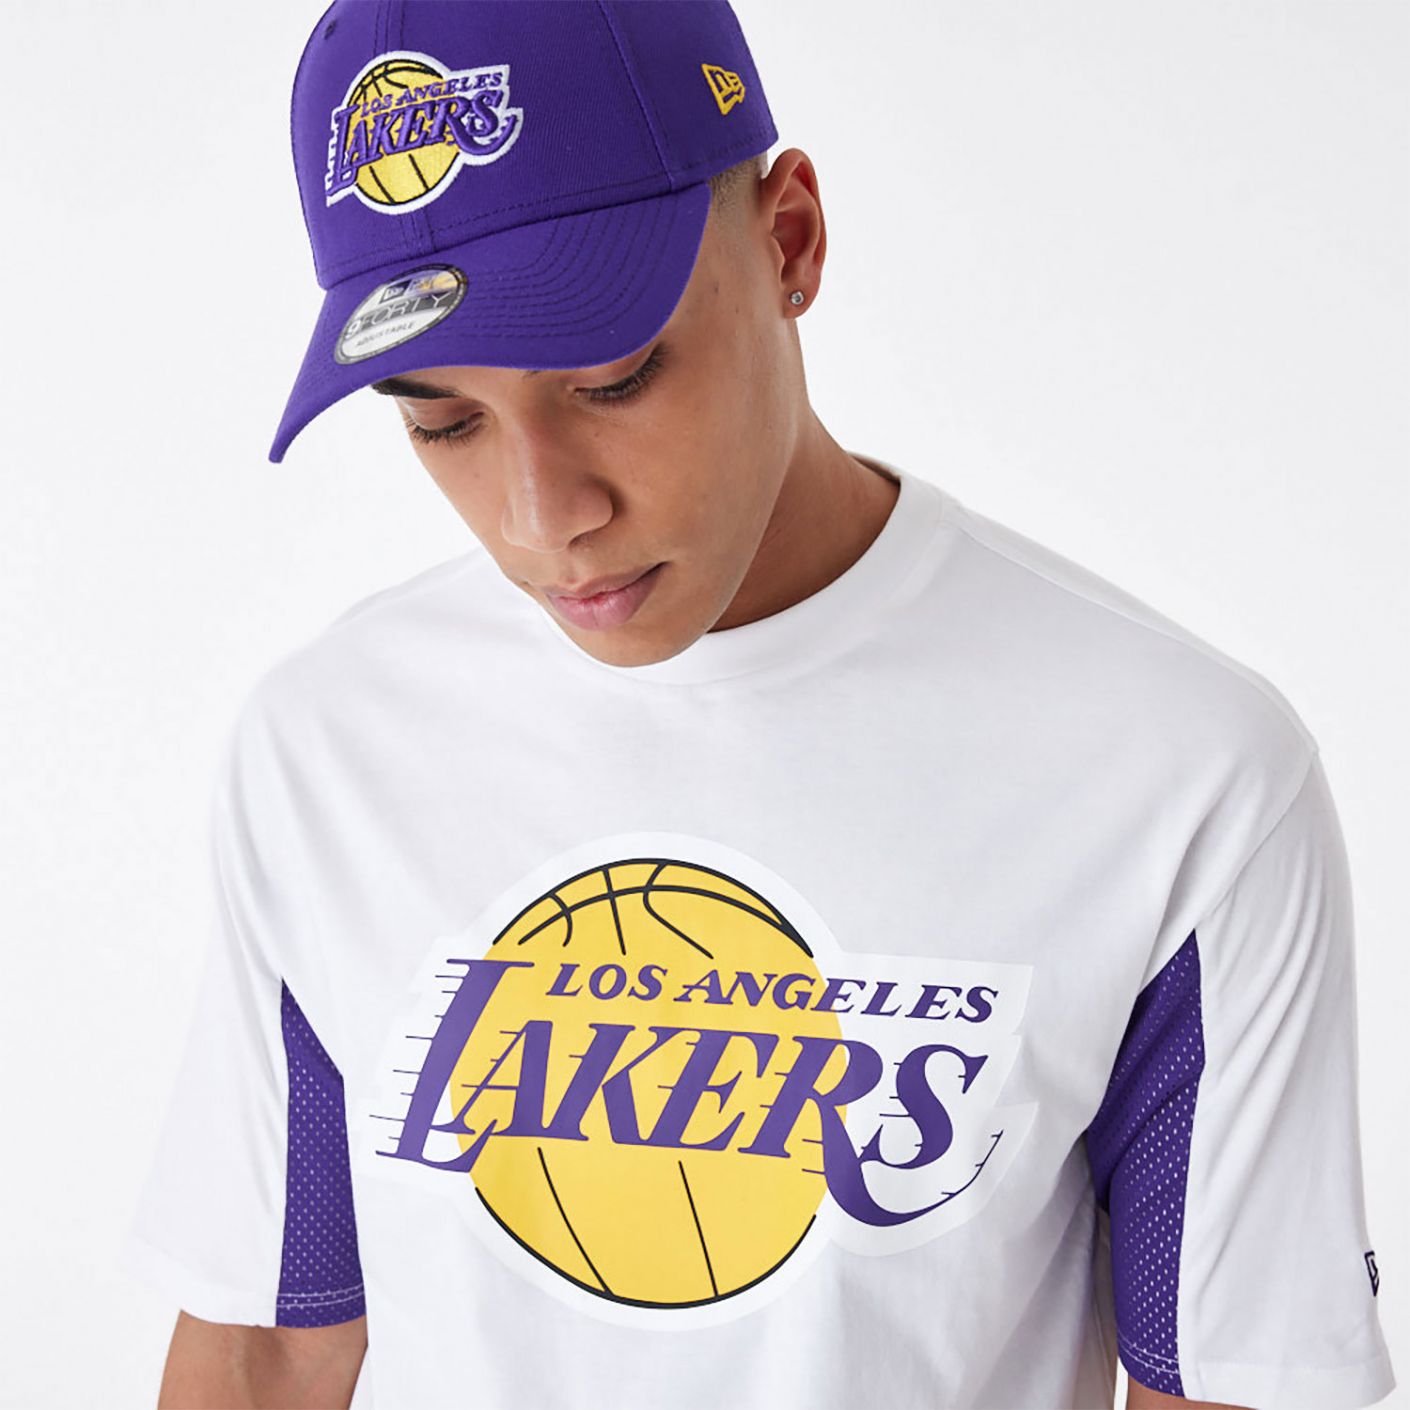 New Era T-Shirt Oversize LA Lakers NBA Mesh Panel Bianca